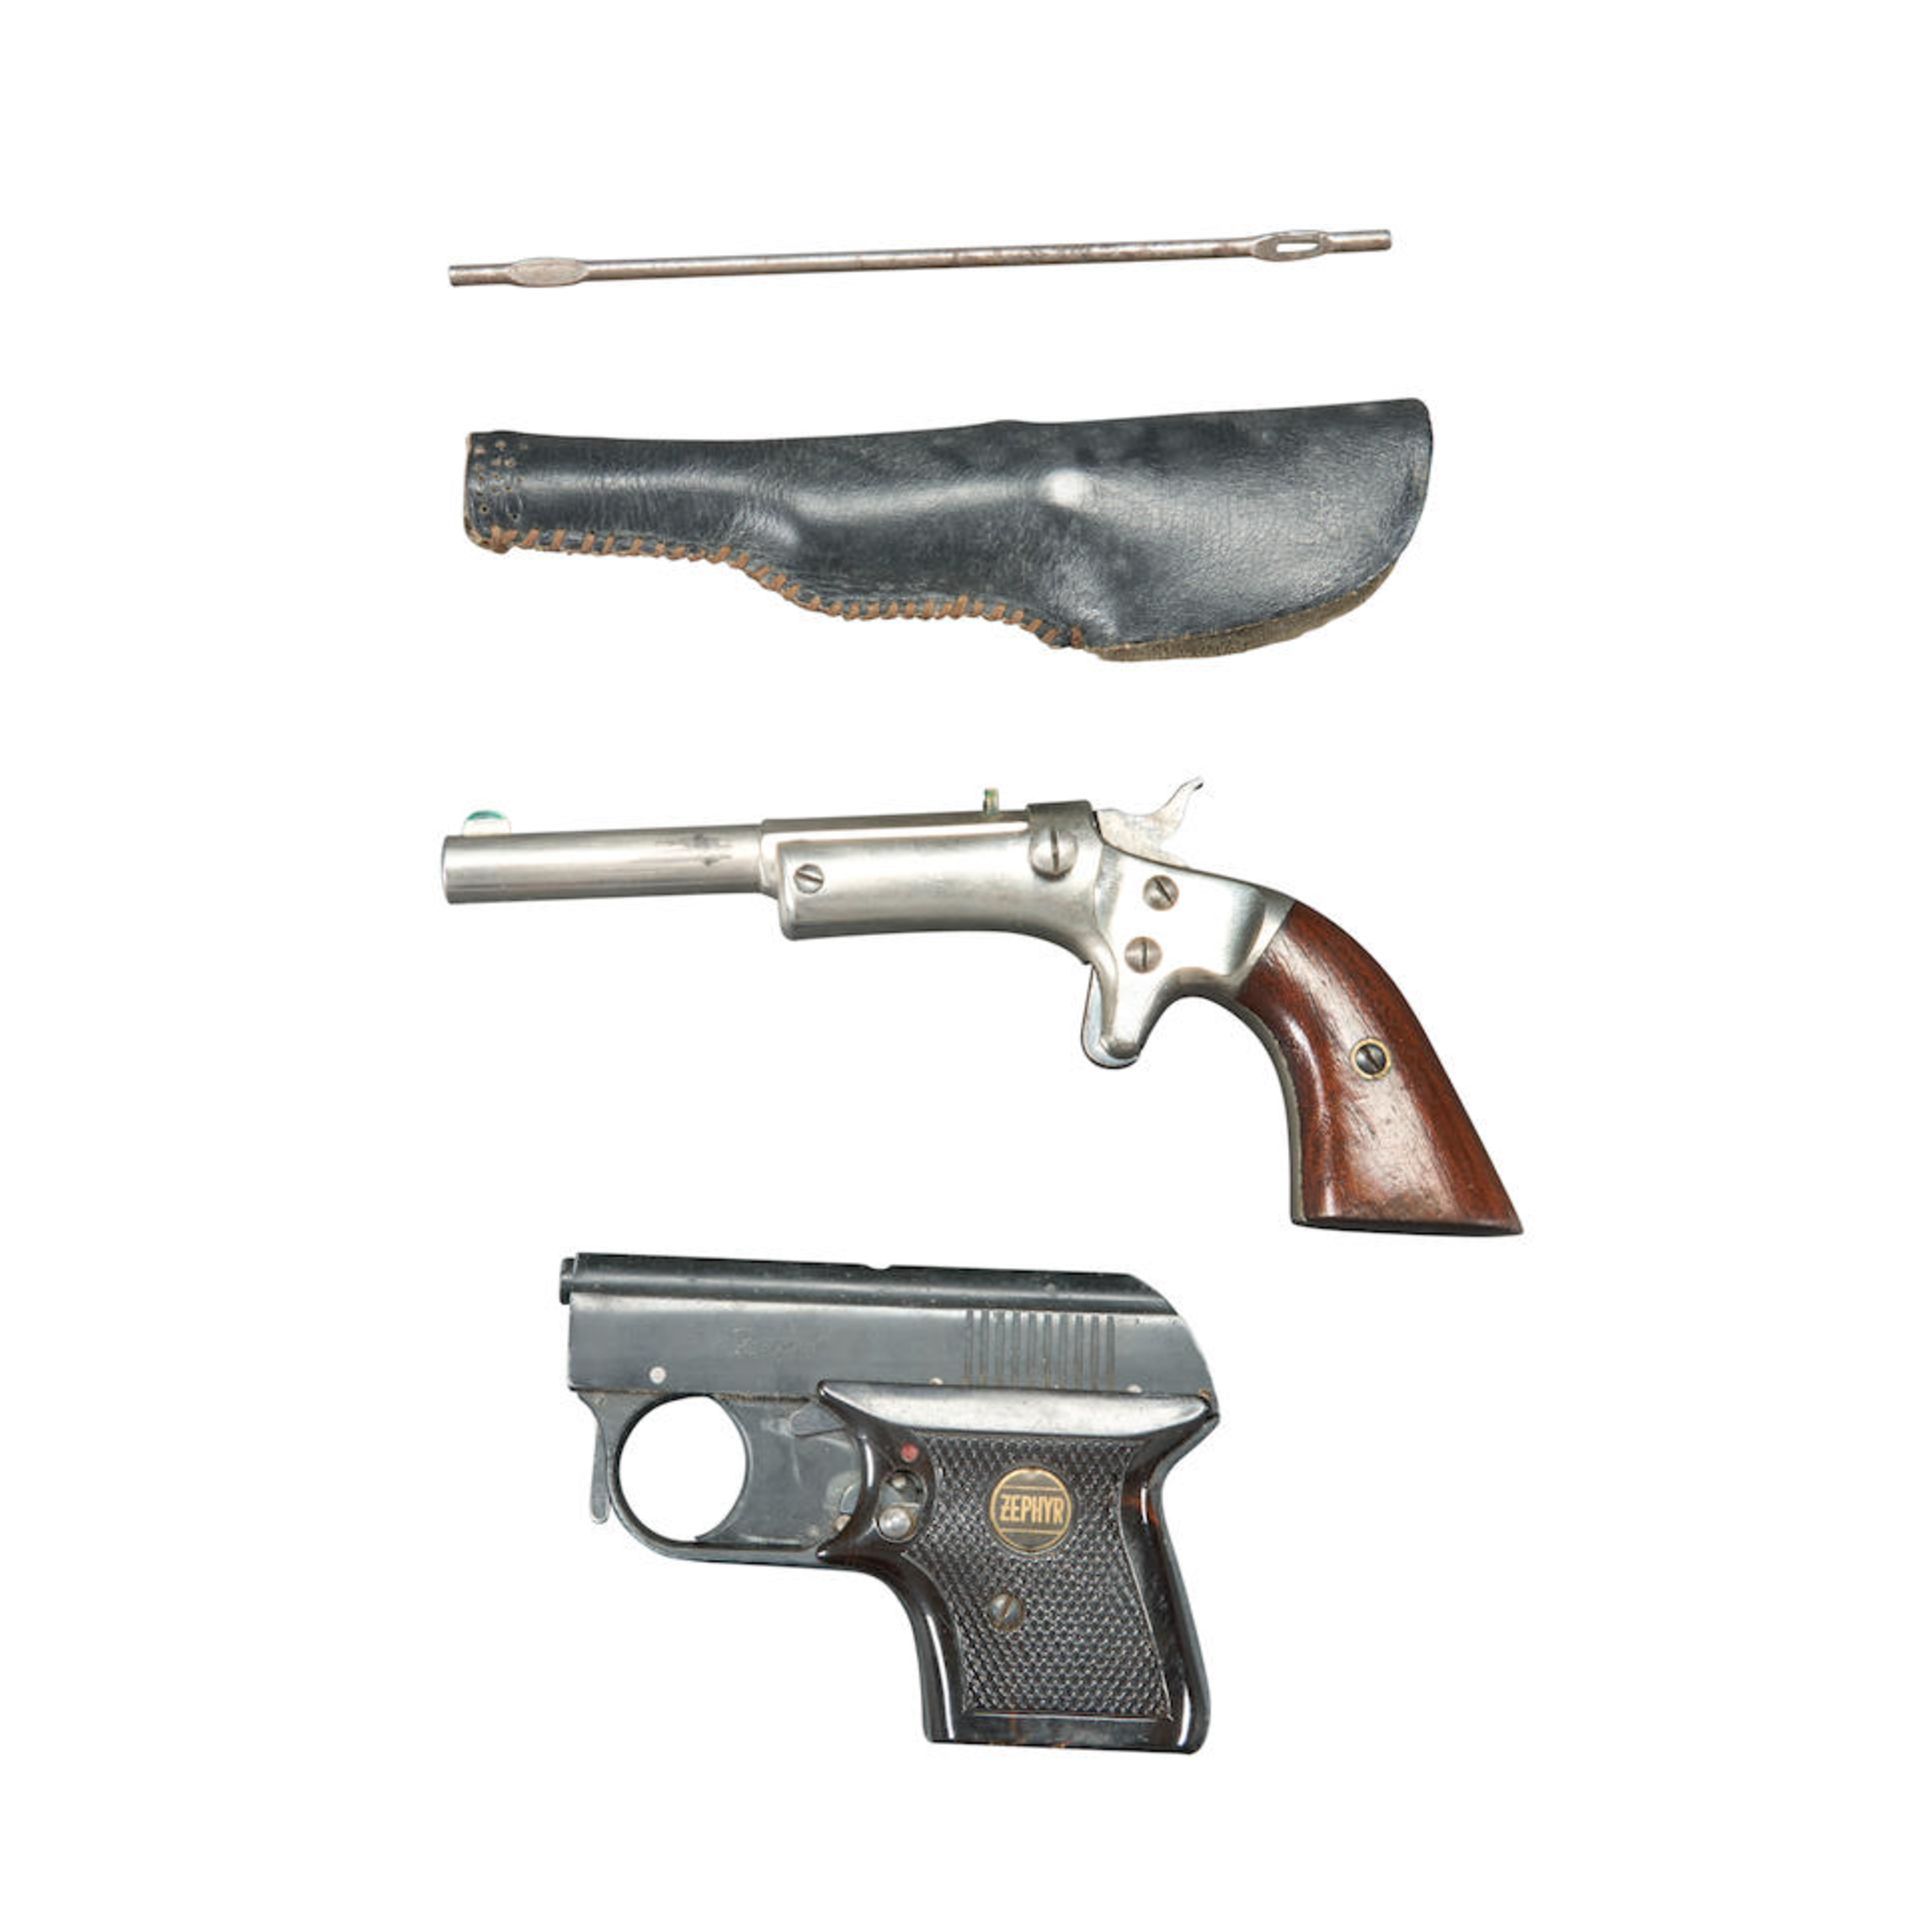 Stevens No. 41 Single Shot Pistol and Zephyr Starter Pistol, Curio or Relic firearm - Bild 2 aus 2